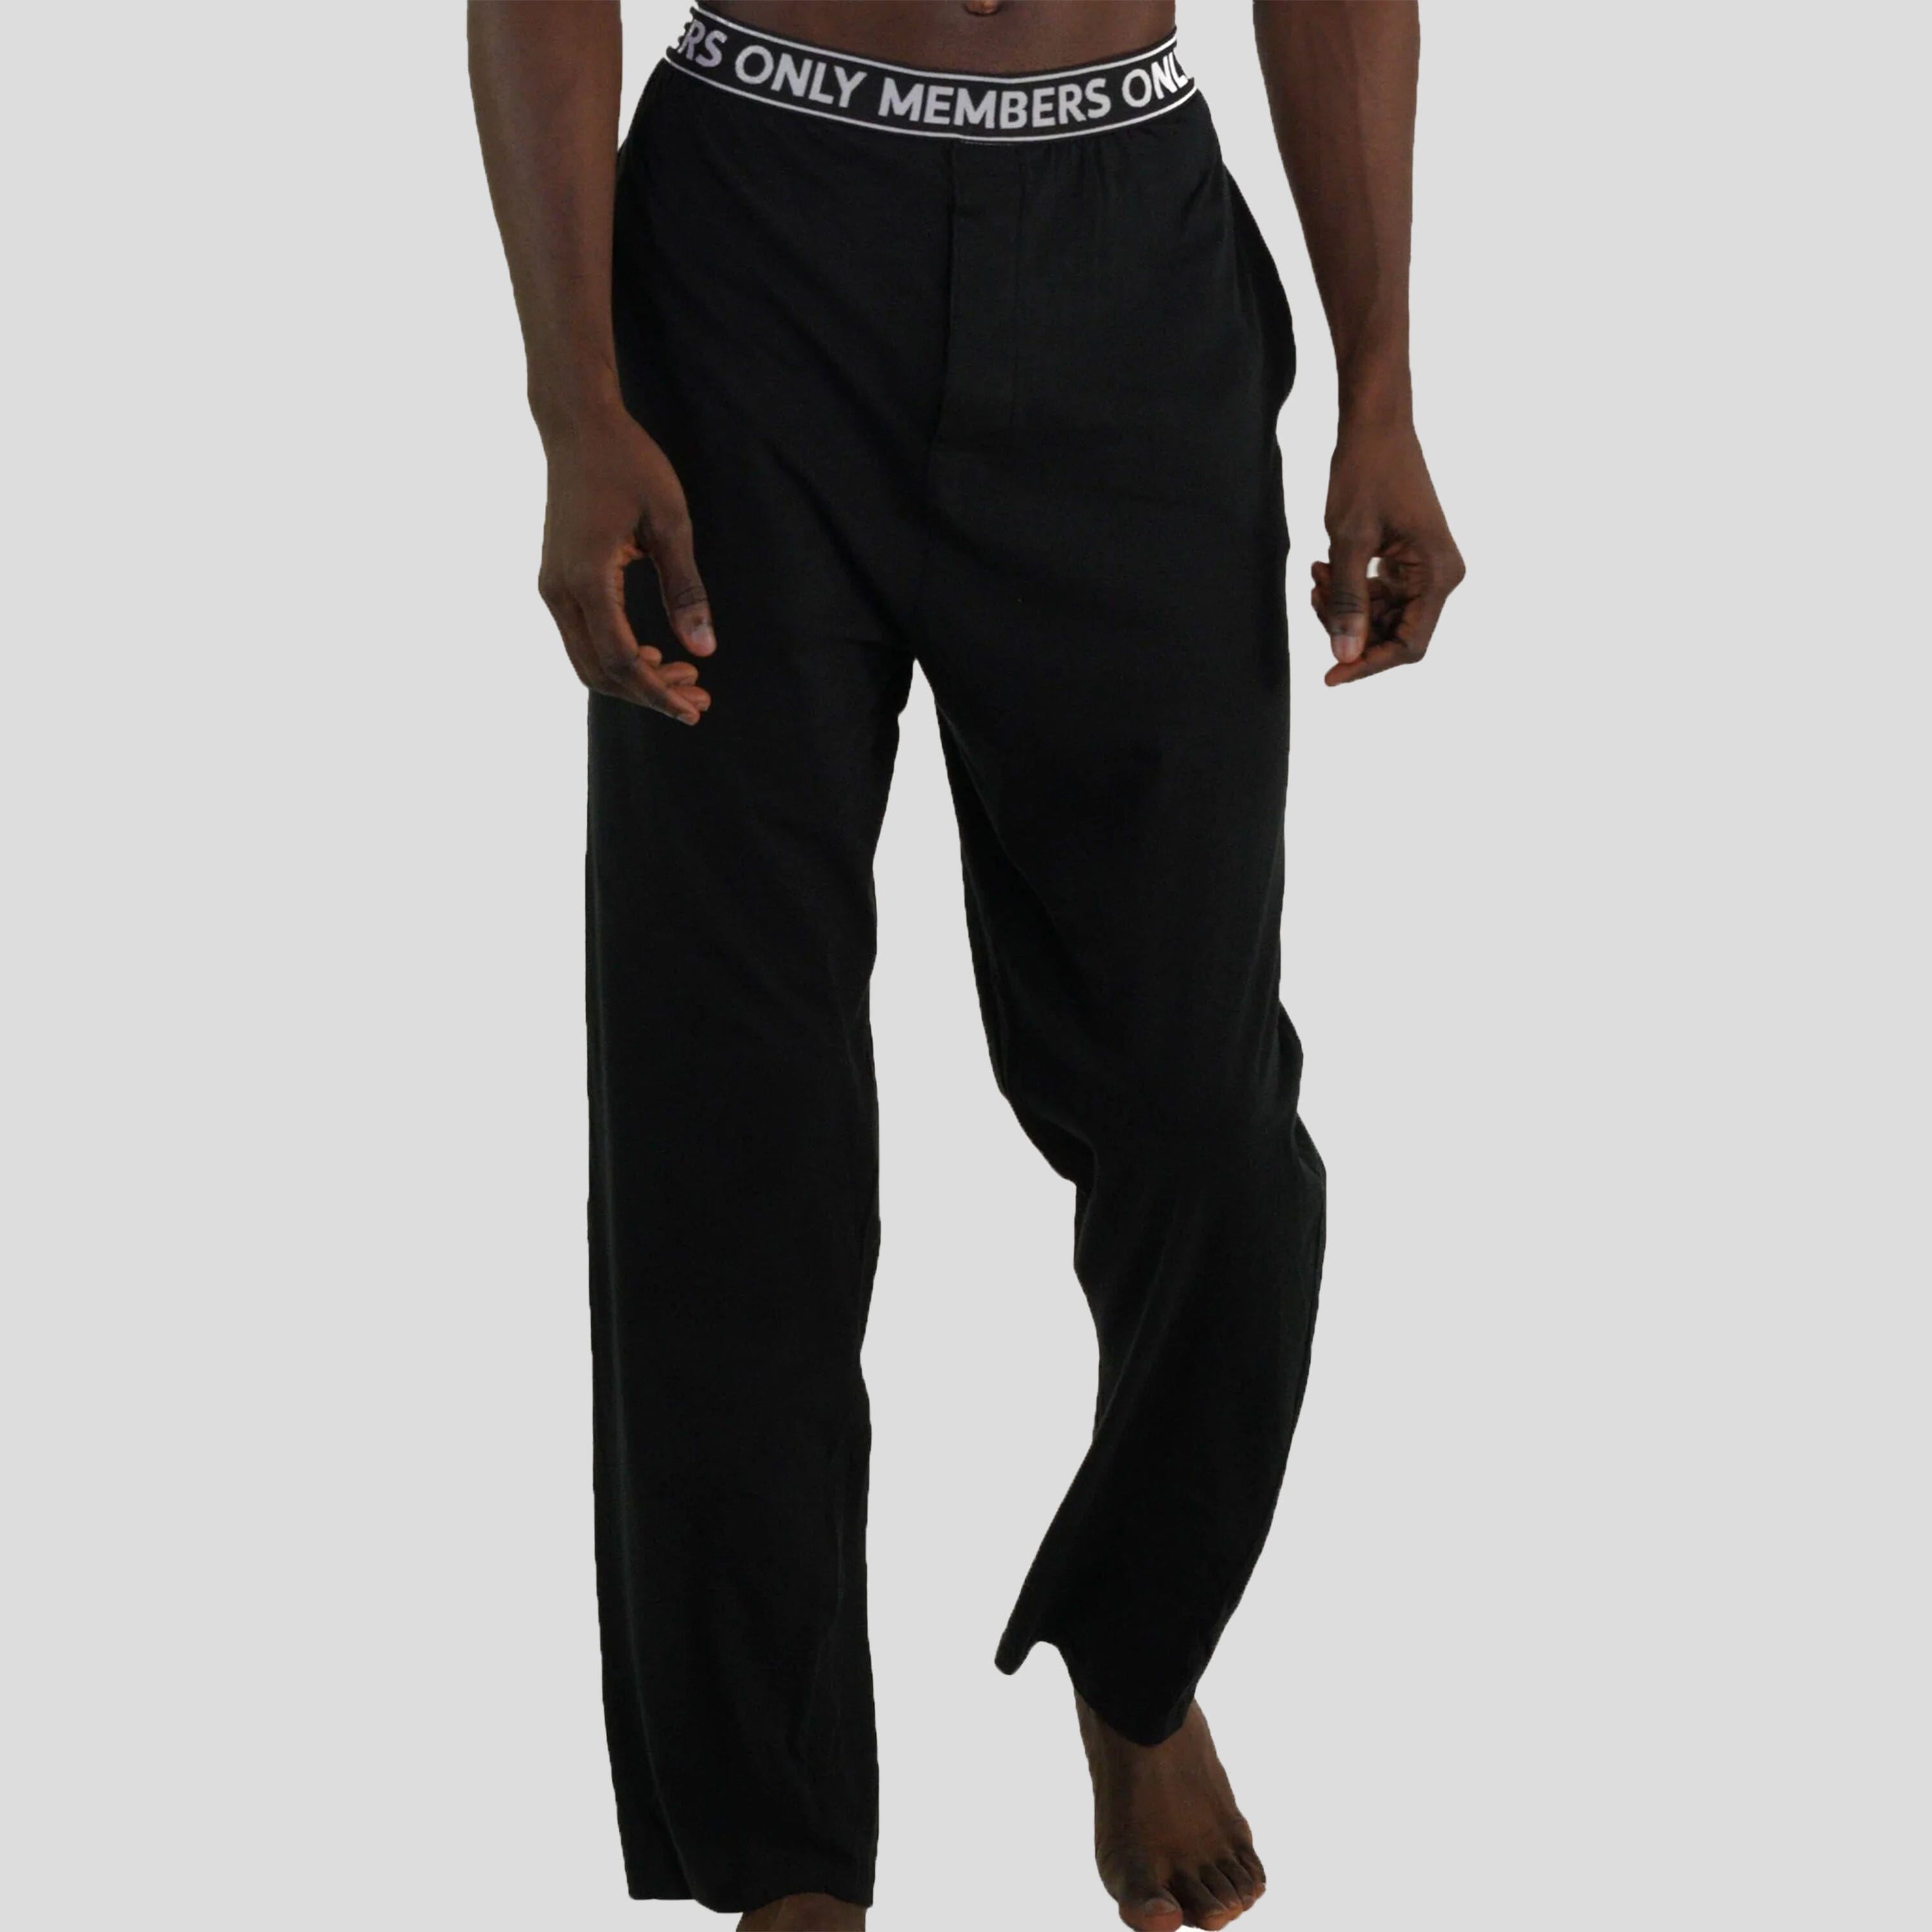 Bonds Comfy Livin Jersey Pants MXM9A Black Mens Sleepwear